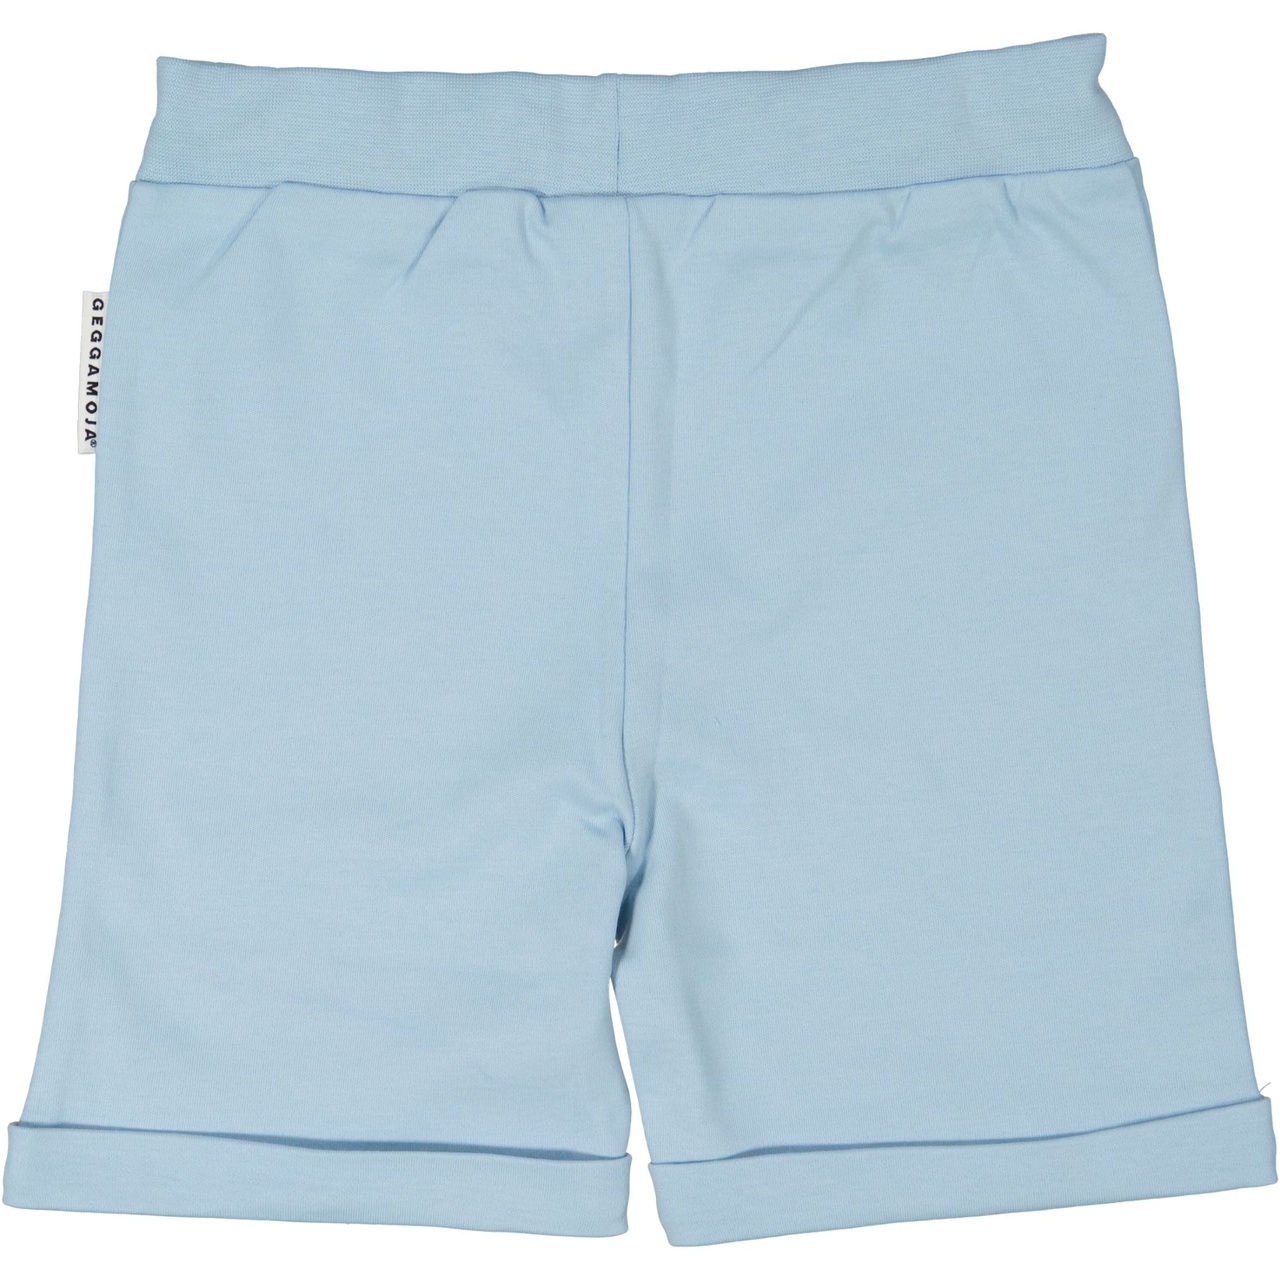 Shorts Light Blue  146/152